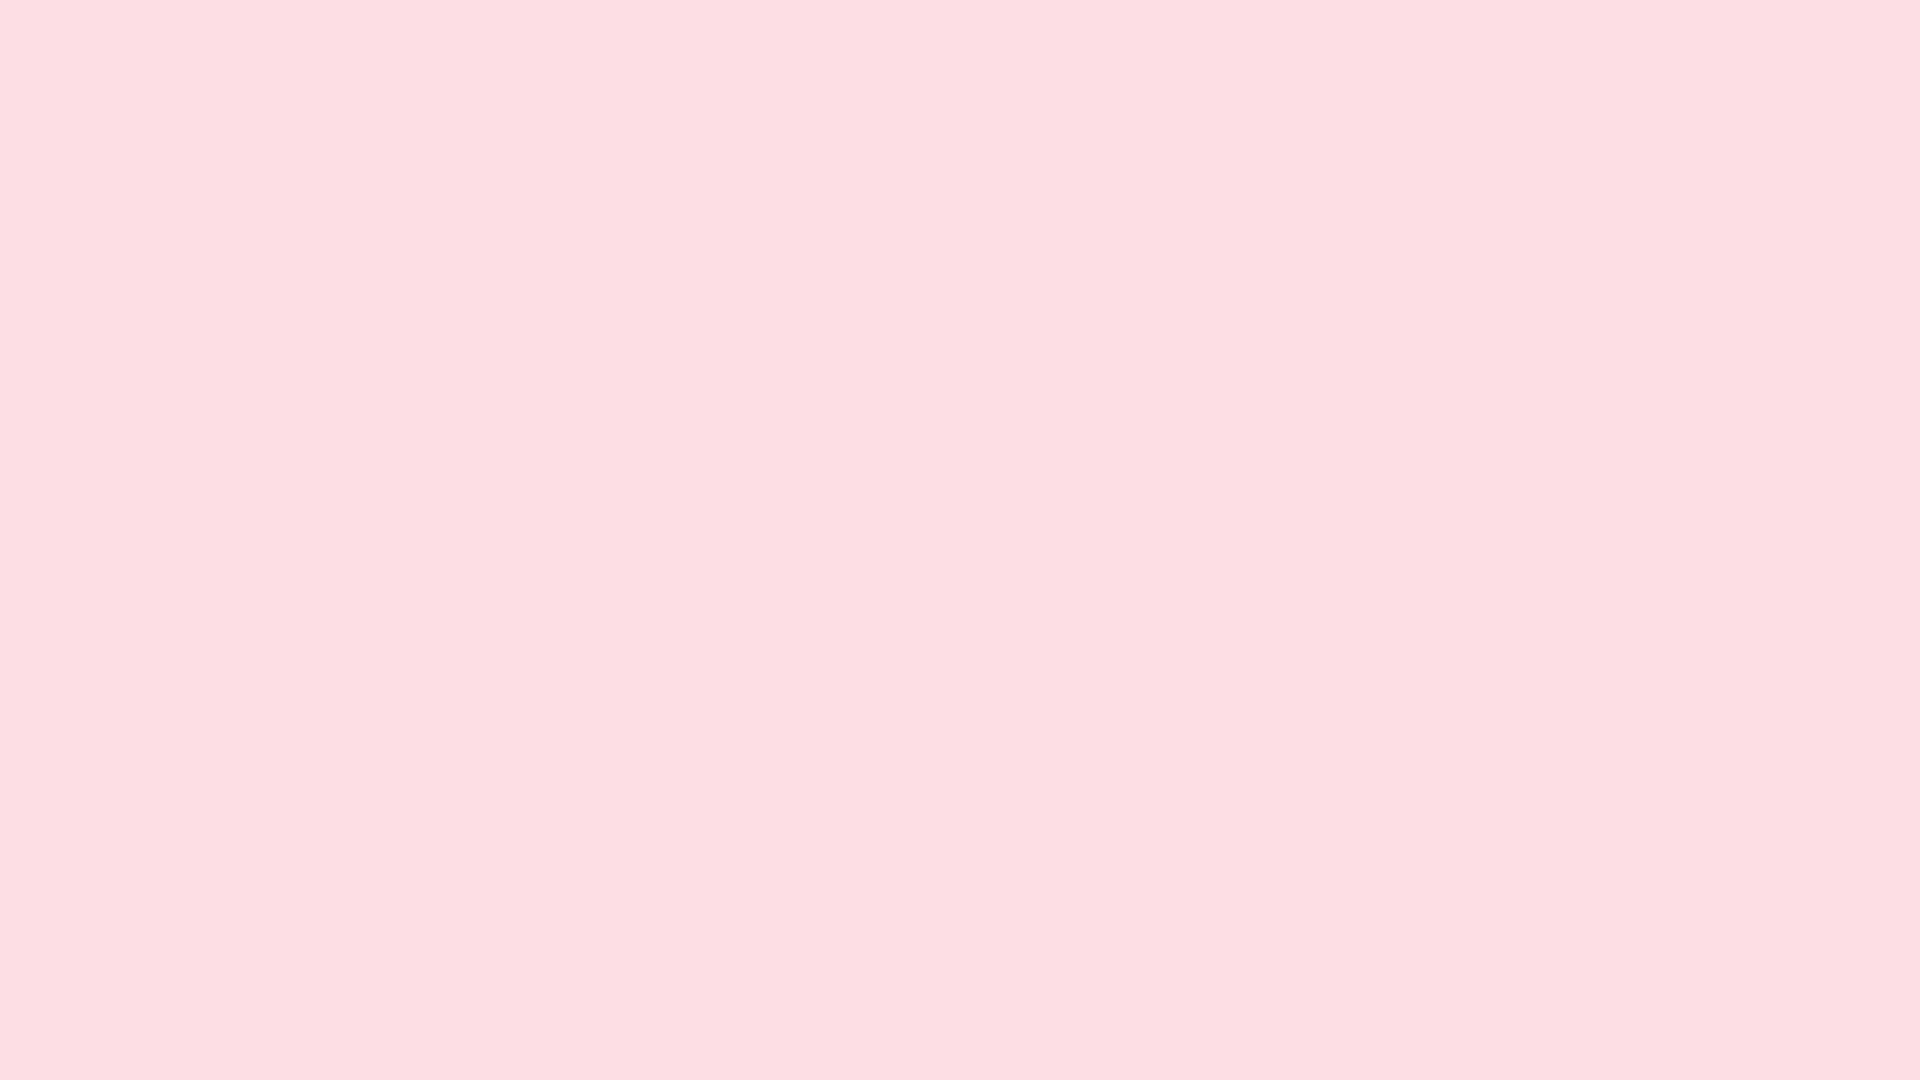 Solid Pink 1920 X 1080 Wallpaper